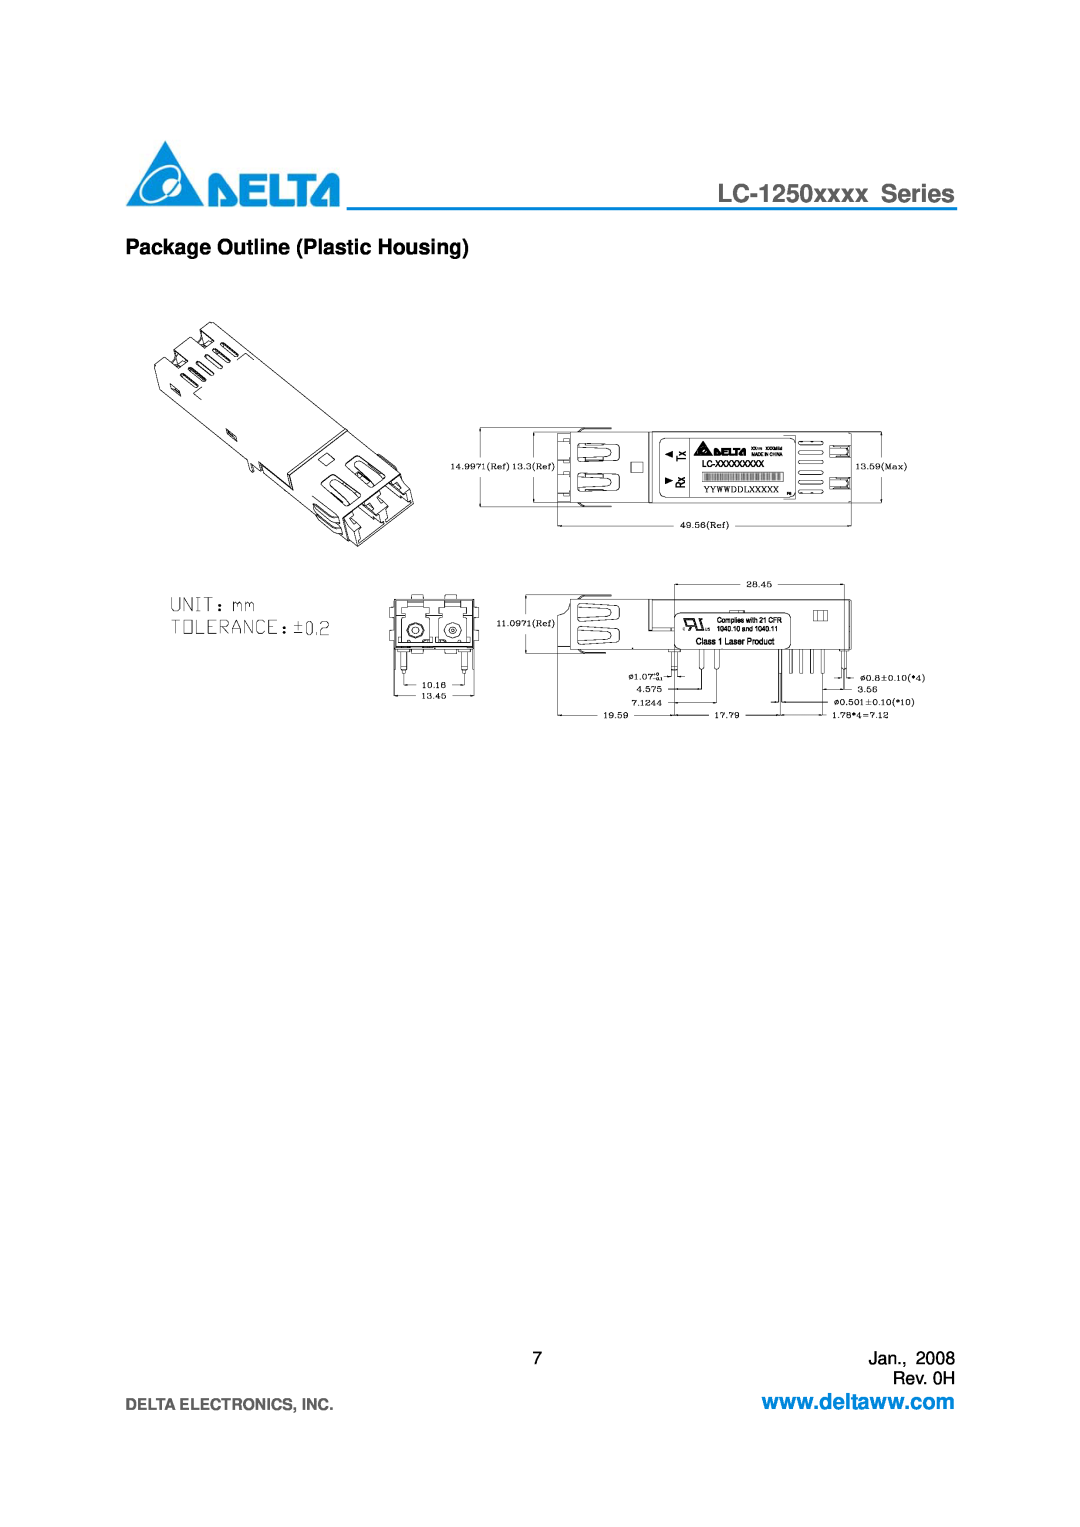 Delta Electronics LC-1250xxxx Series specifications Package Outline Plastic Housing, Delta Electronics, Inc 